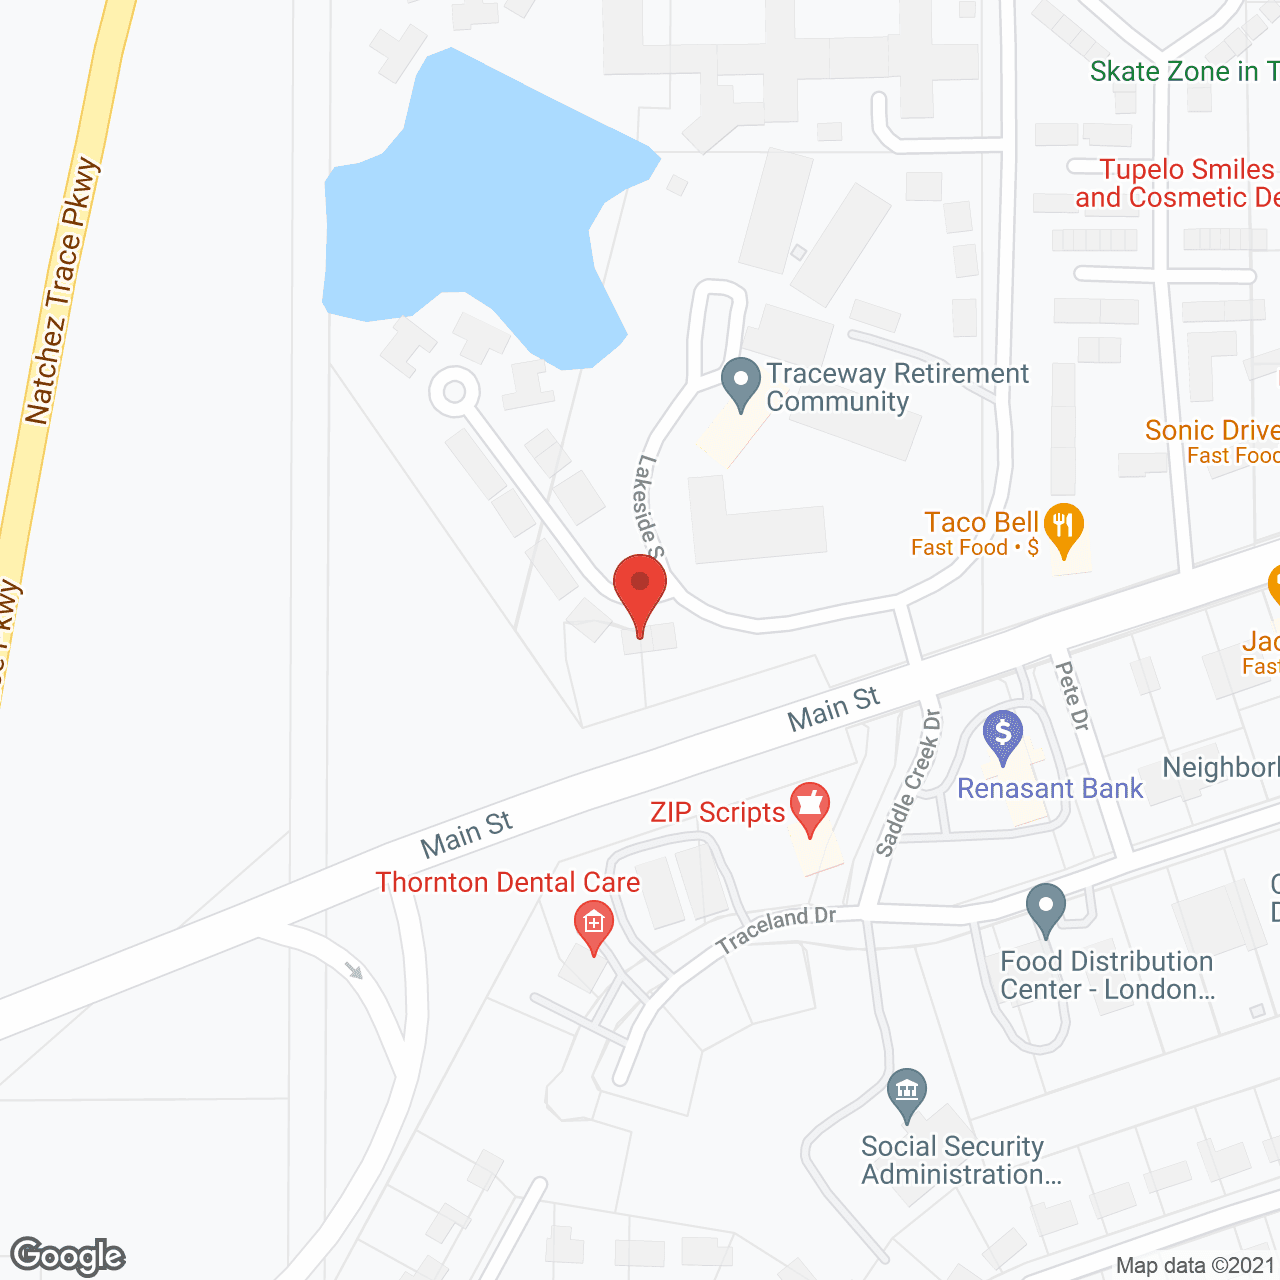 Mitchell Center in google map